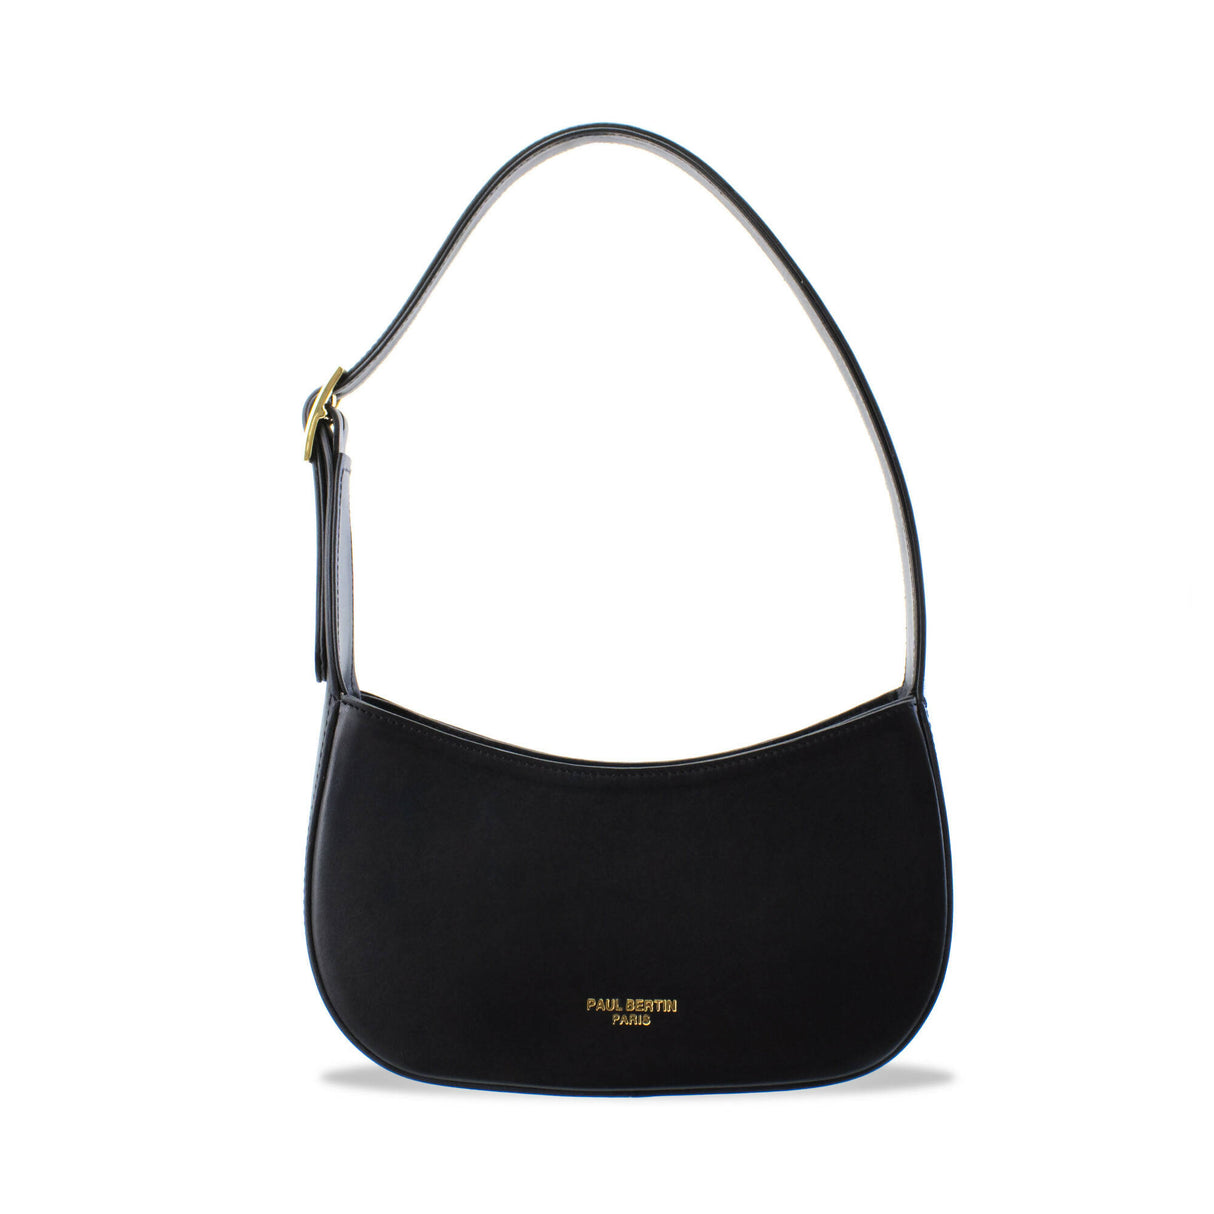 Bobo - Black leather baguette handbag